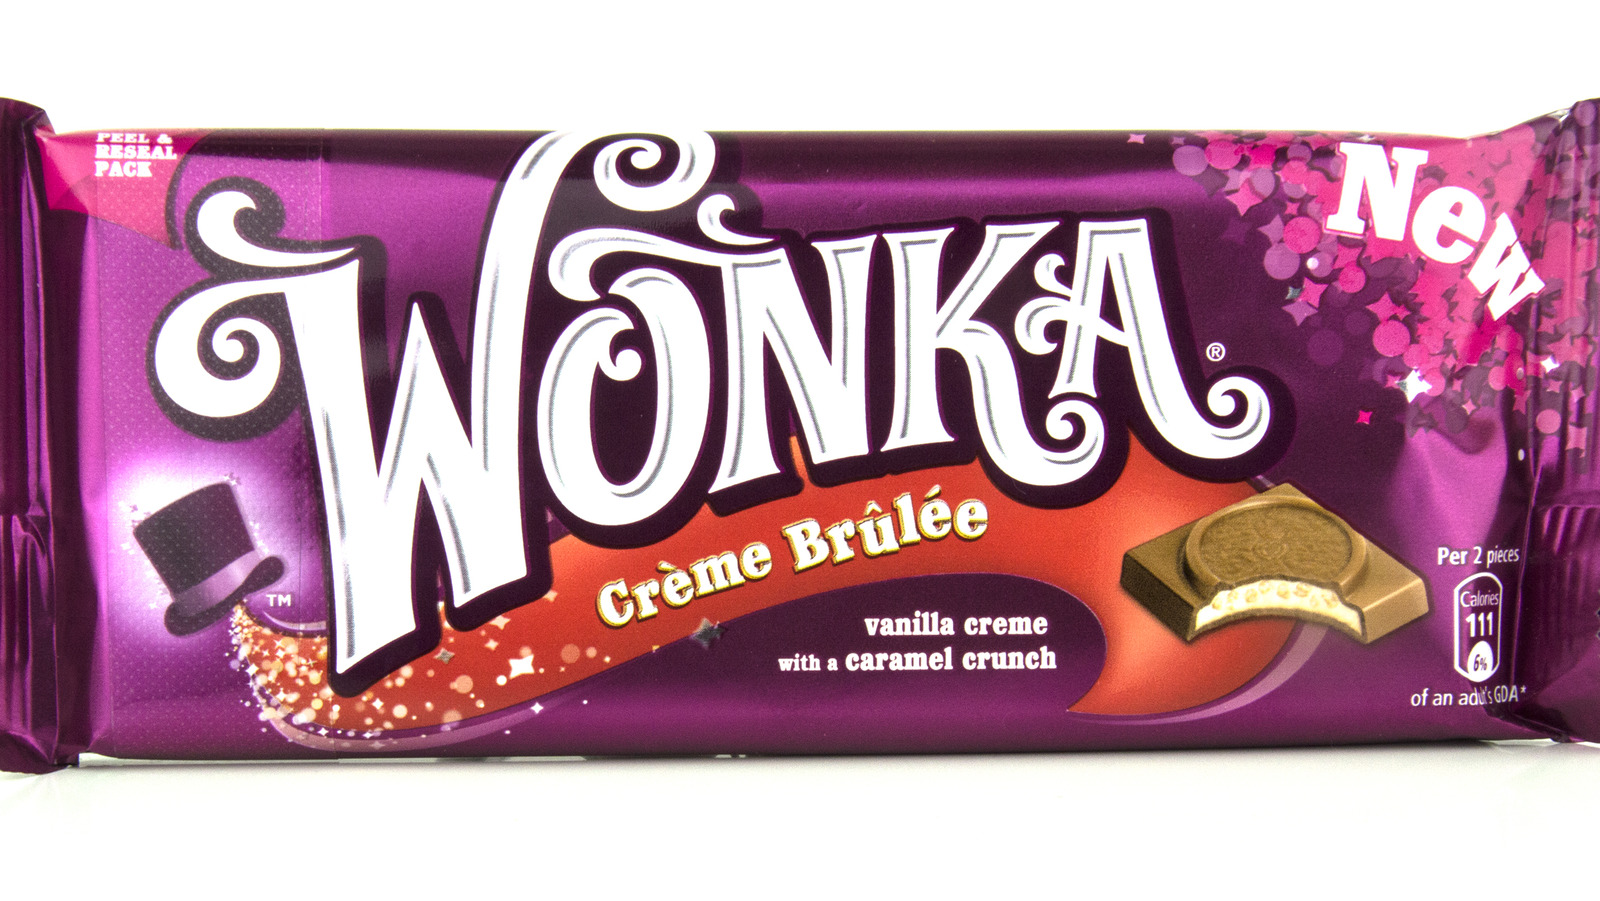 real wonka chocolate factory